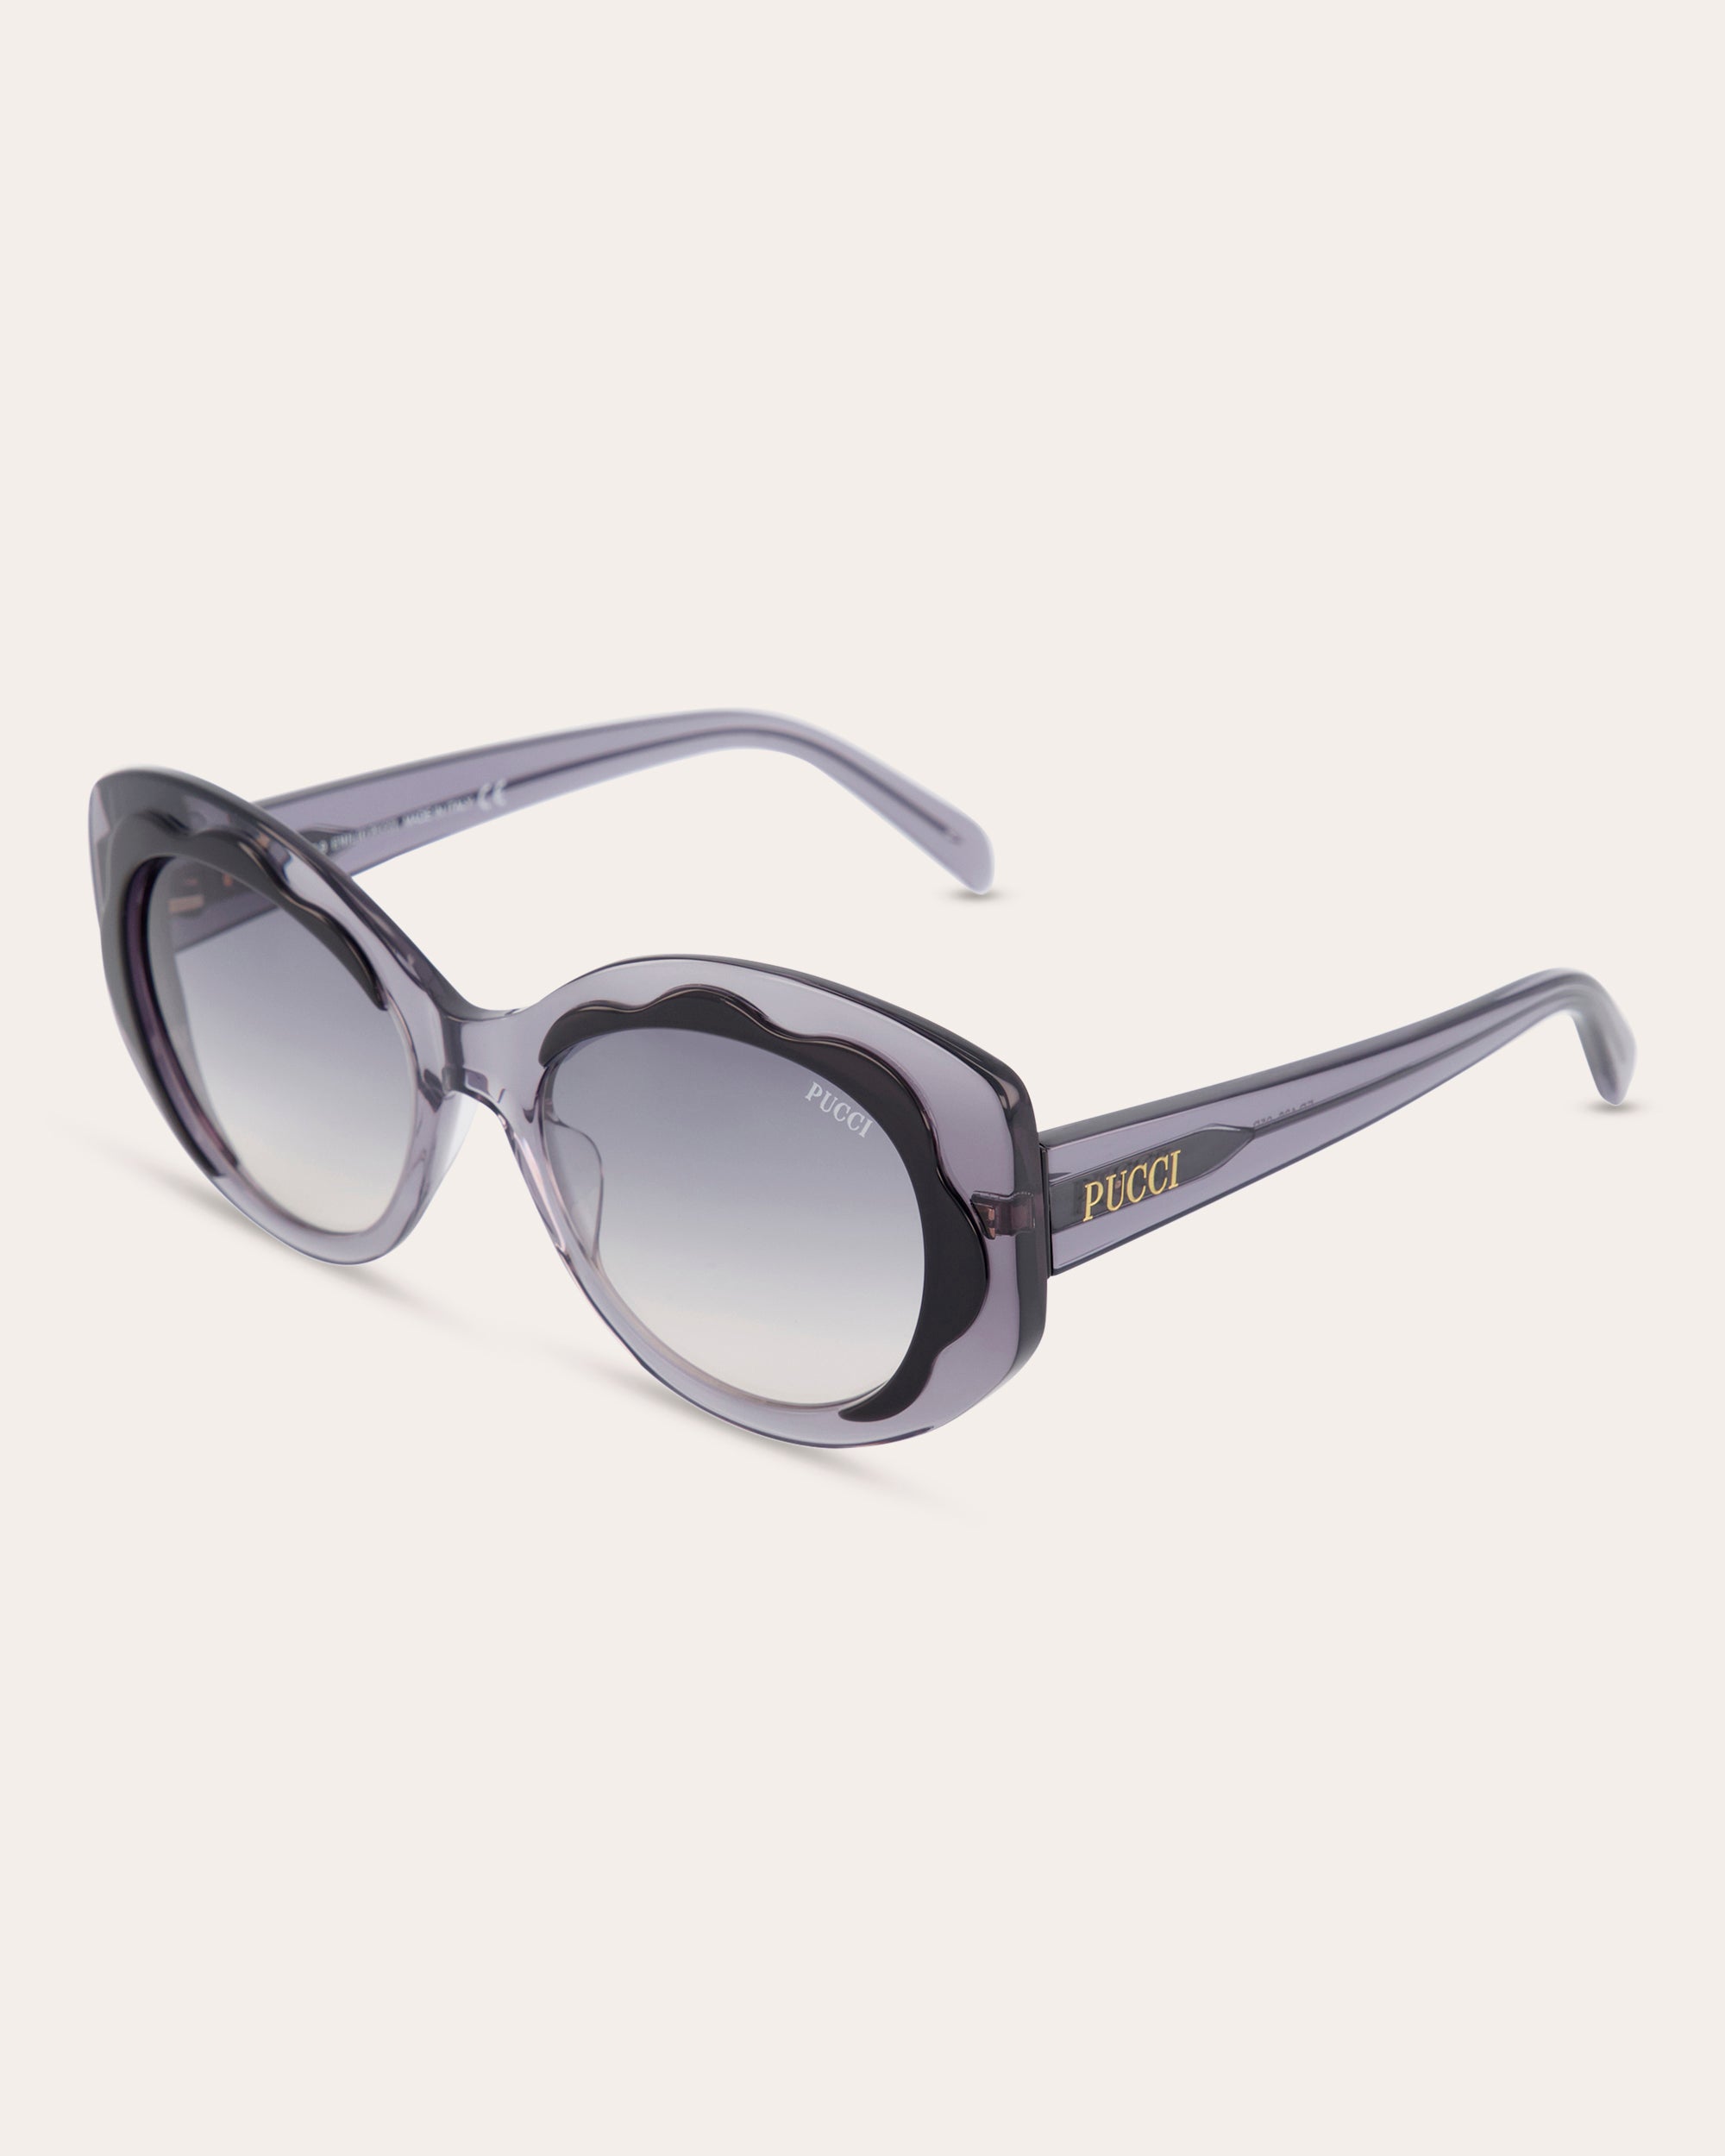 Emilio Pucci EP0136 Sunglasses - 05B Transp. Grey W. Shiny Black Front Detail/ Gradient Grey